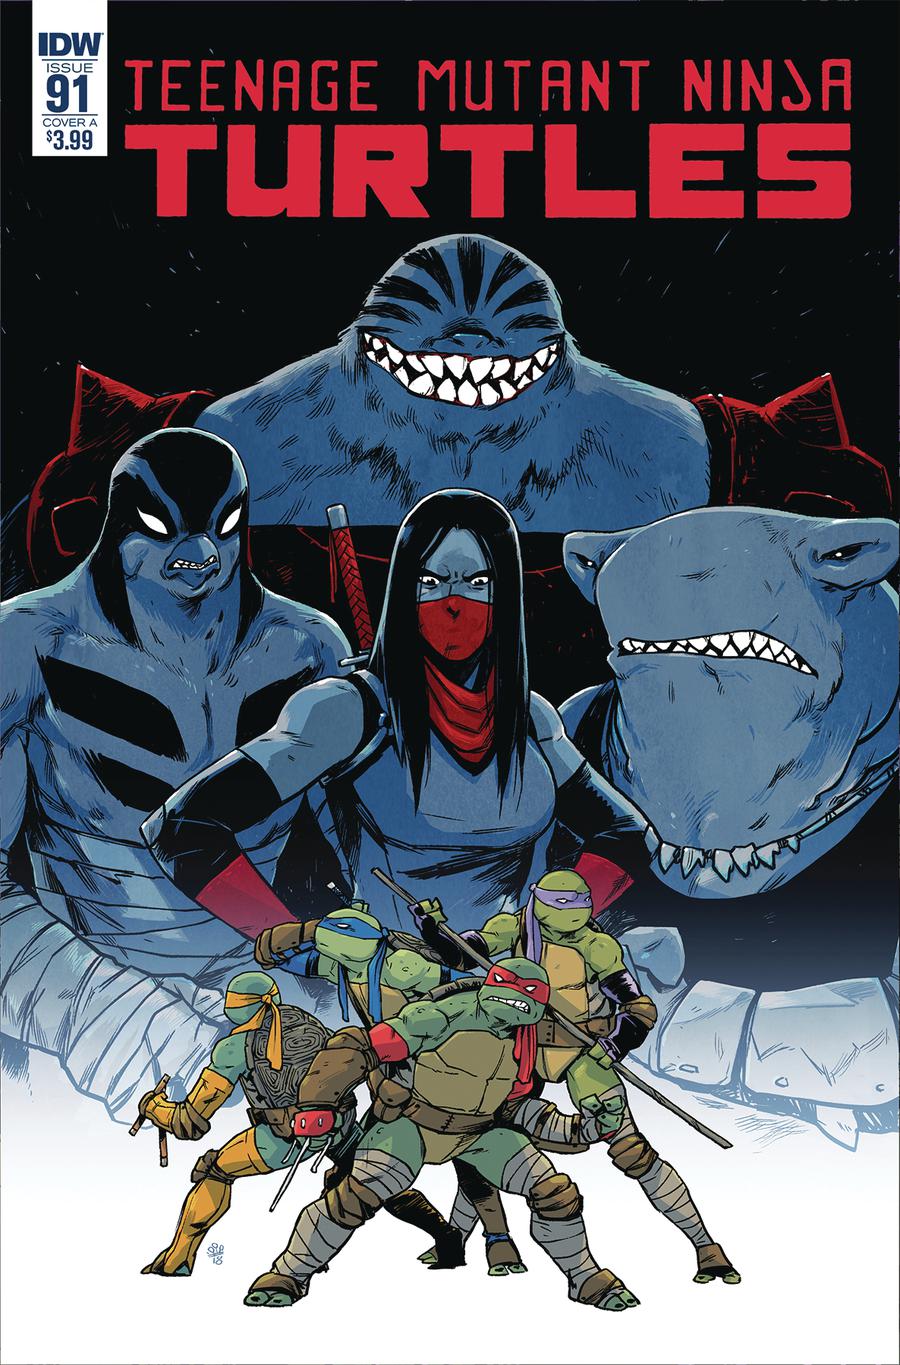 Teenage Mutant Ninja Turtles Vol 5 #91 Cover A Regular Michael Dialynas Cover